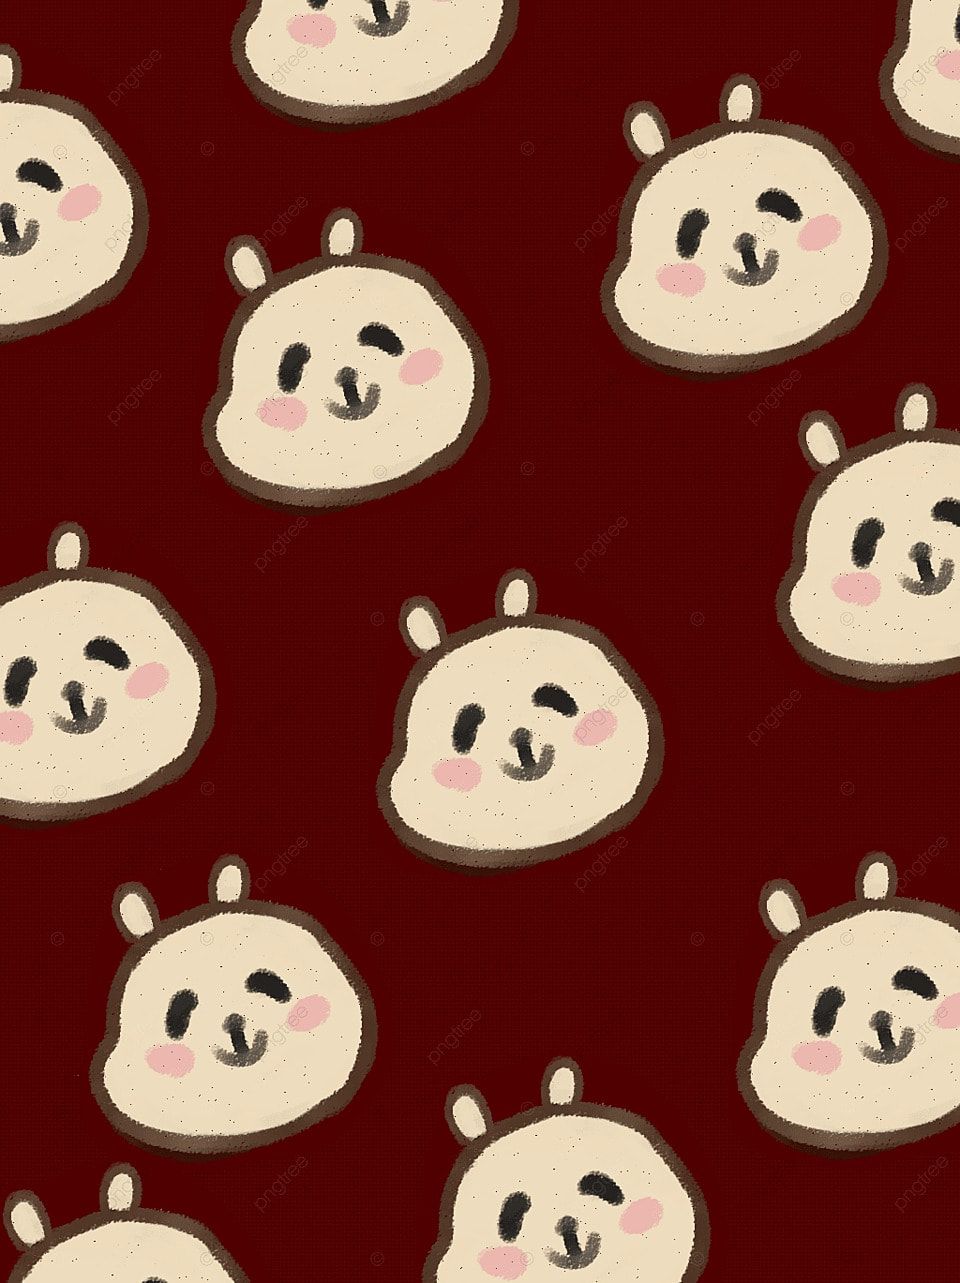 Cute Little Panda Cute Crimson Background Wallpaper Image For Free Download